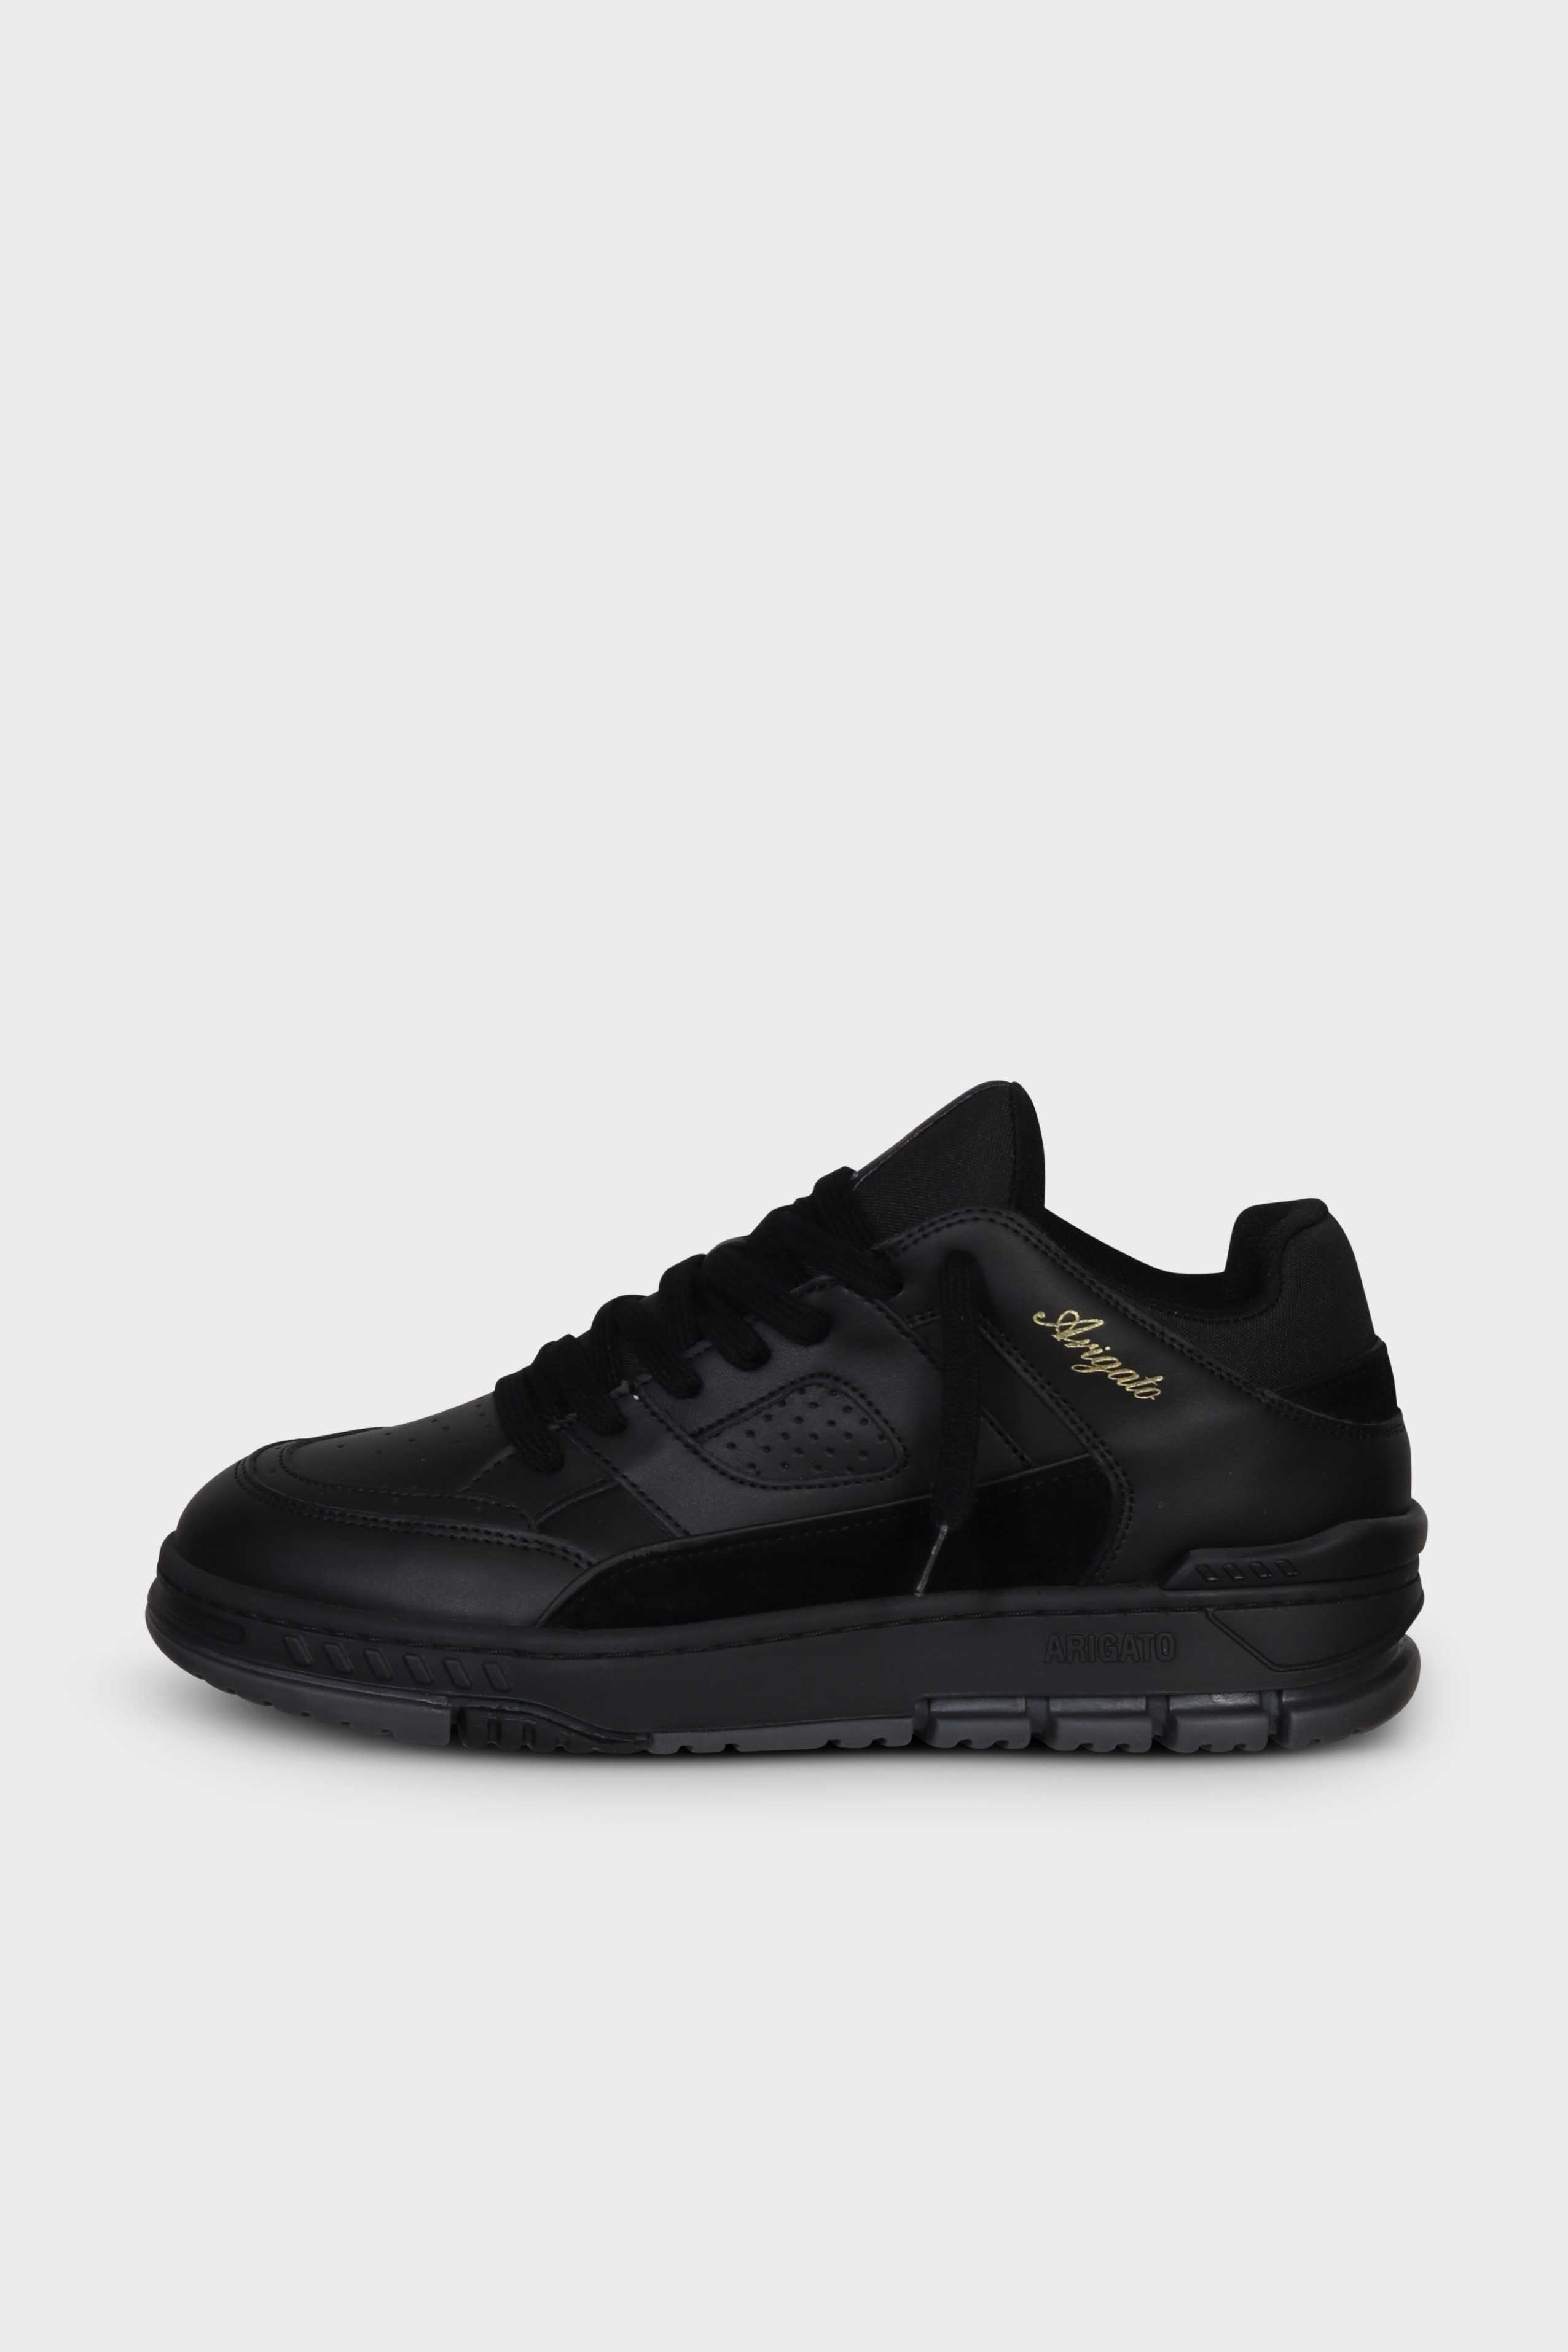 AXEL ARIGATO Area Sneaker in Black/Grey